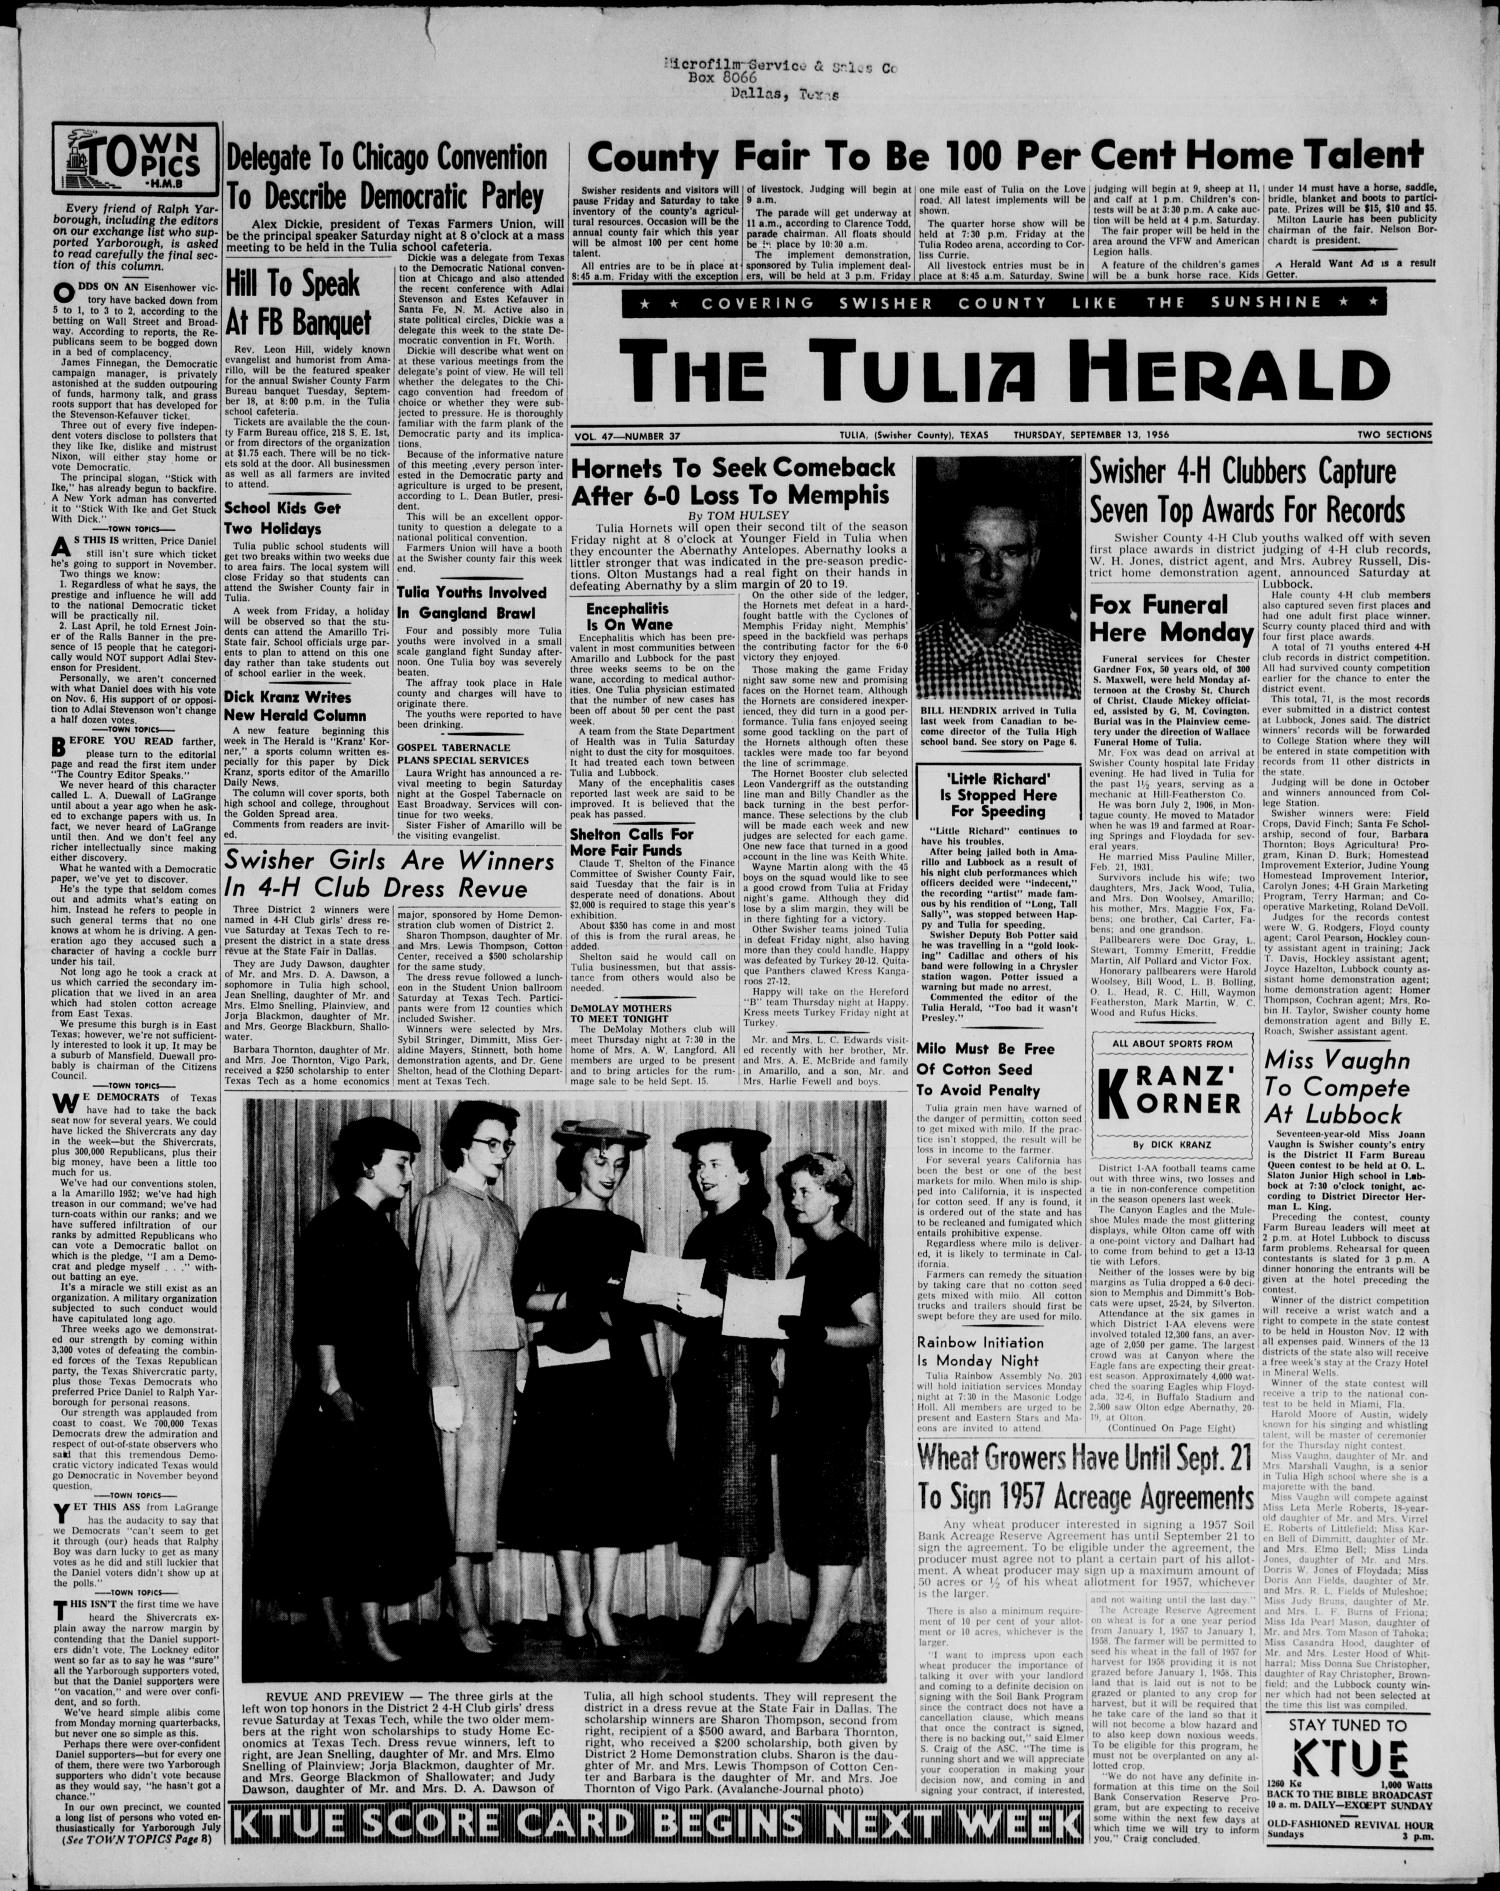 The Tulia Herald (Tulia, Tex), Vol. 47, No. 37, Ed. 1, Thursday, September 13, 1956
                                                
                                                    1
                                                